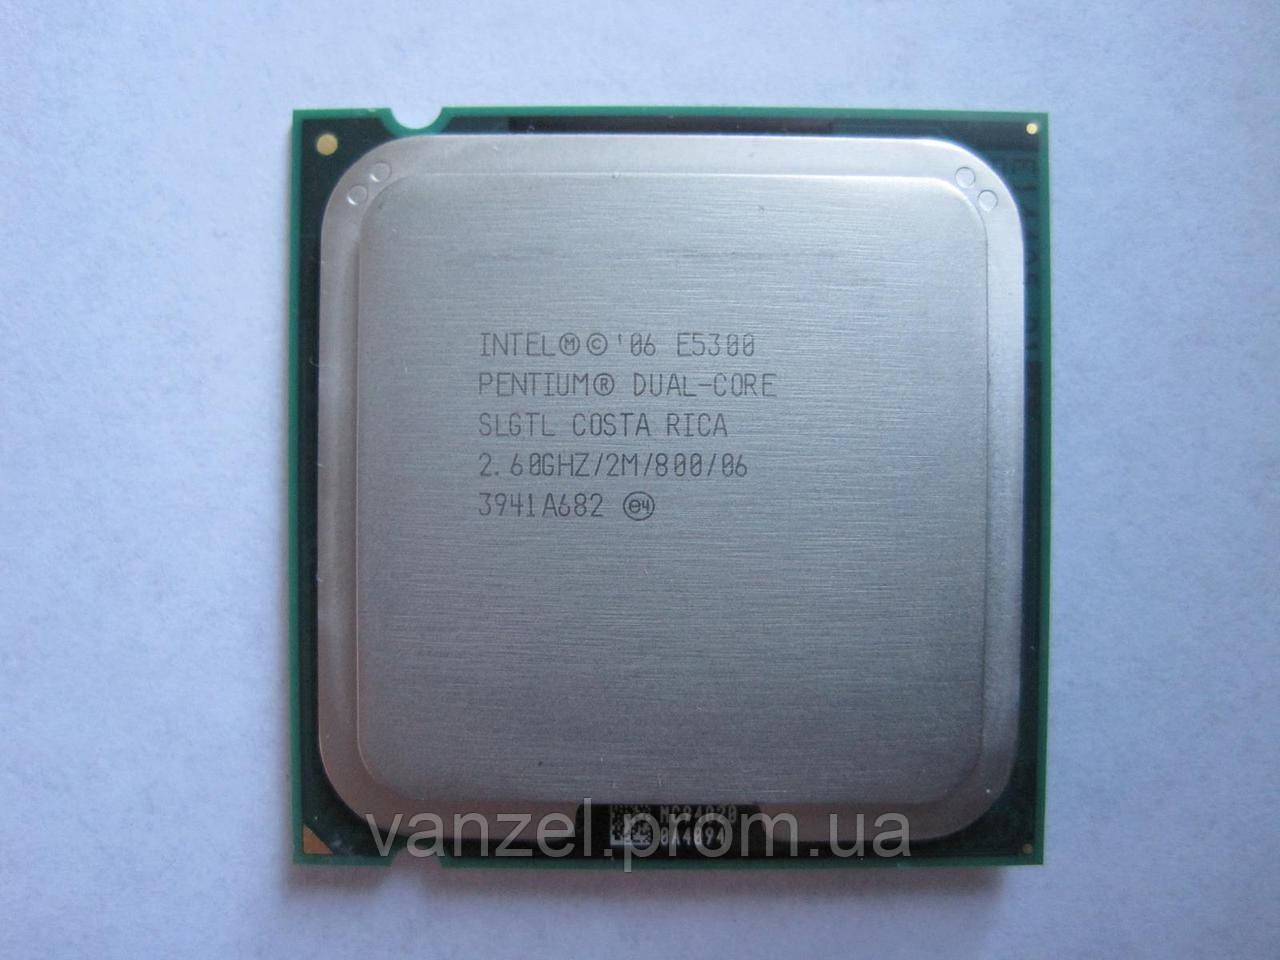 Pentium e5300 gta 5 фото 49